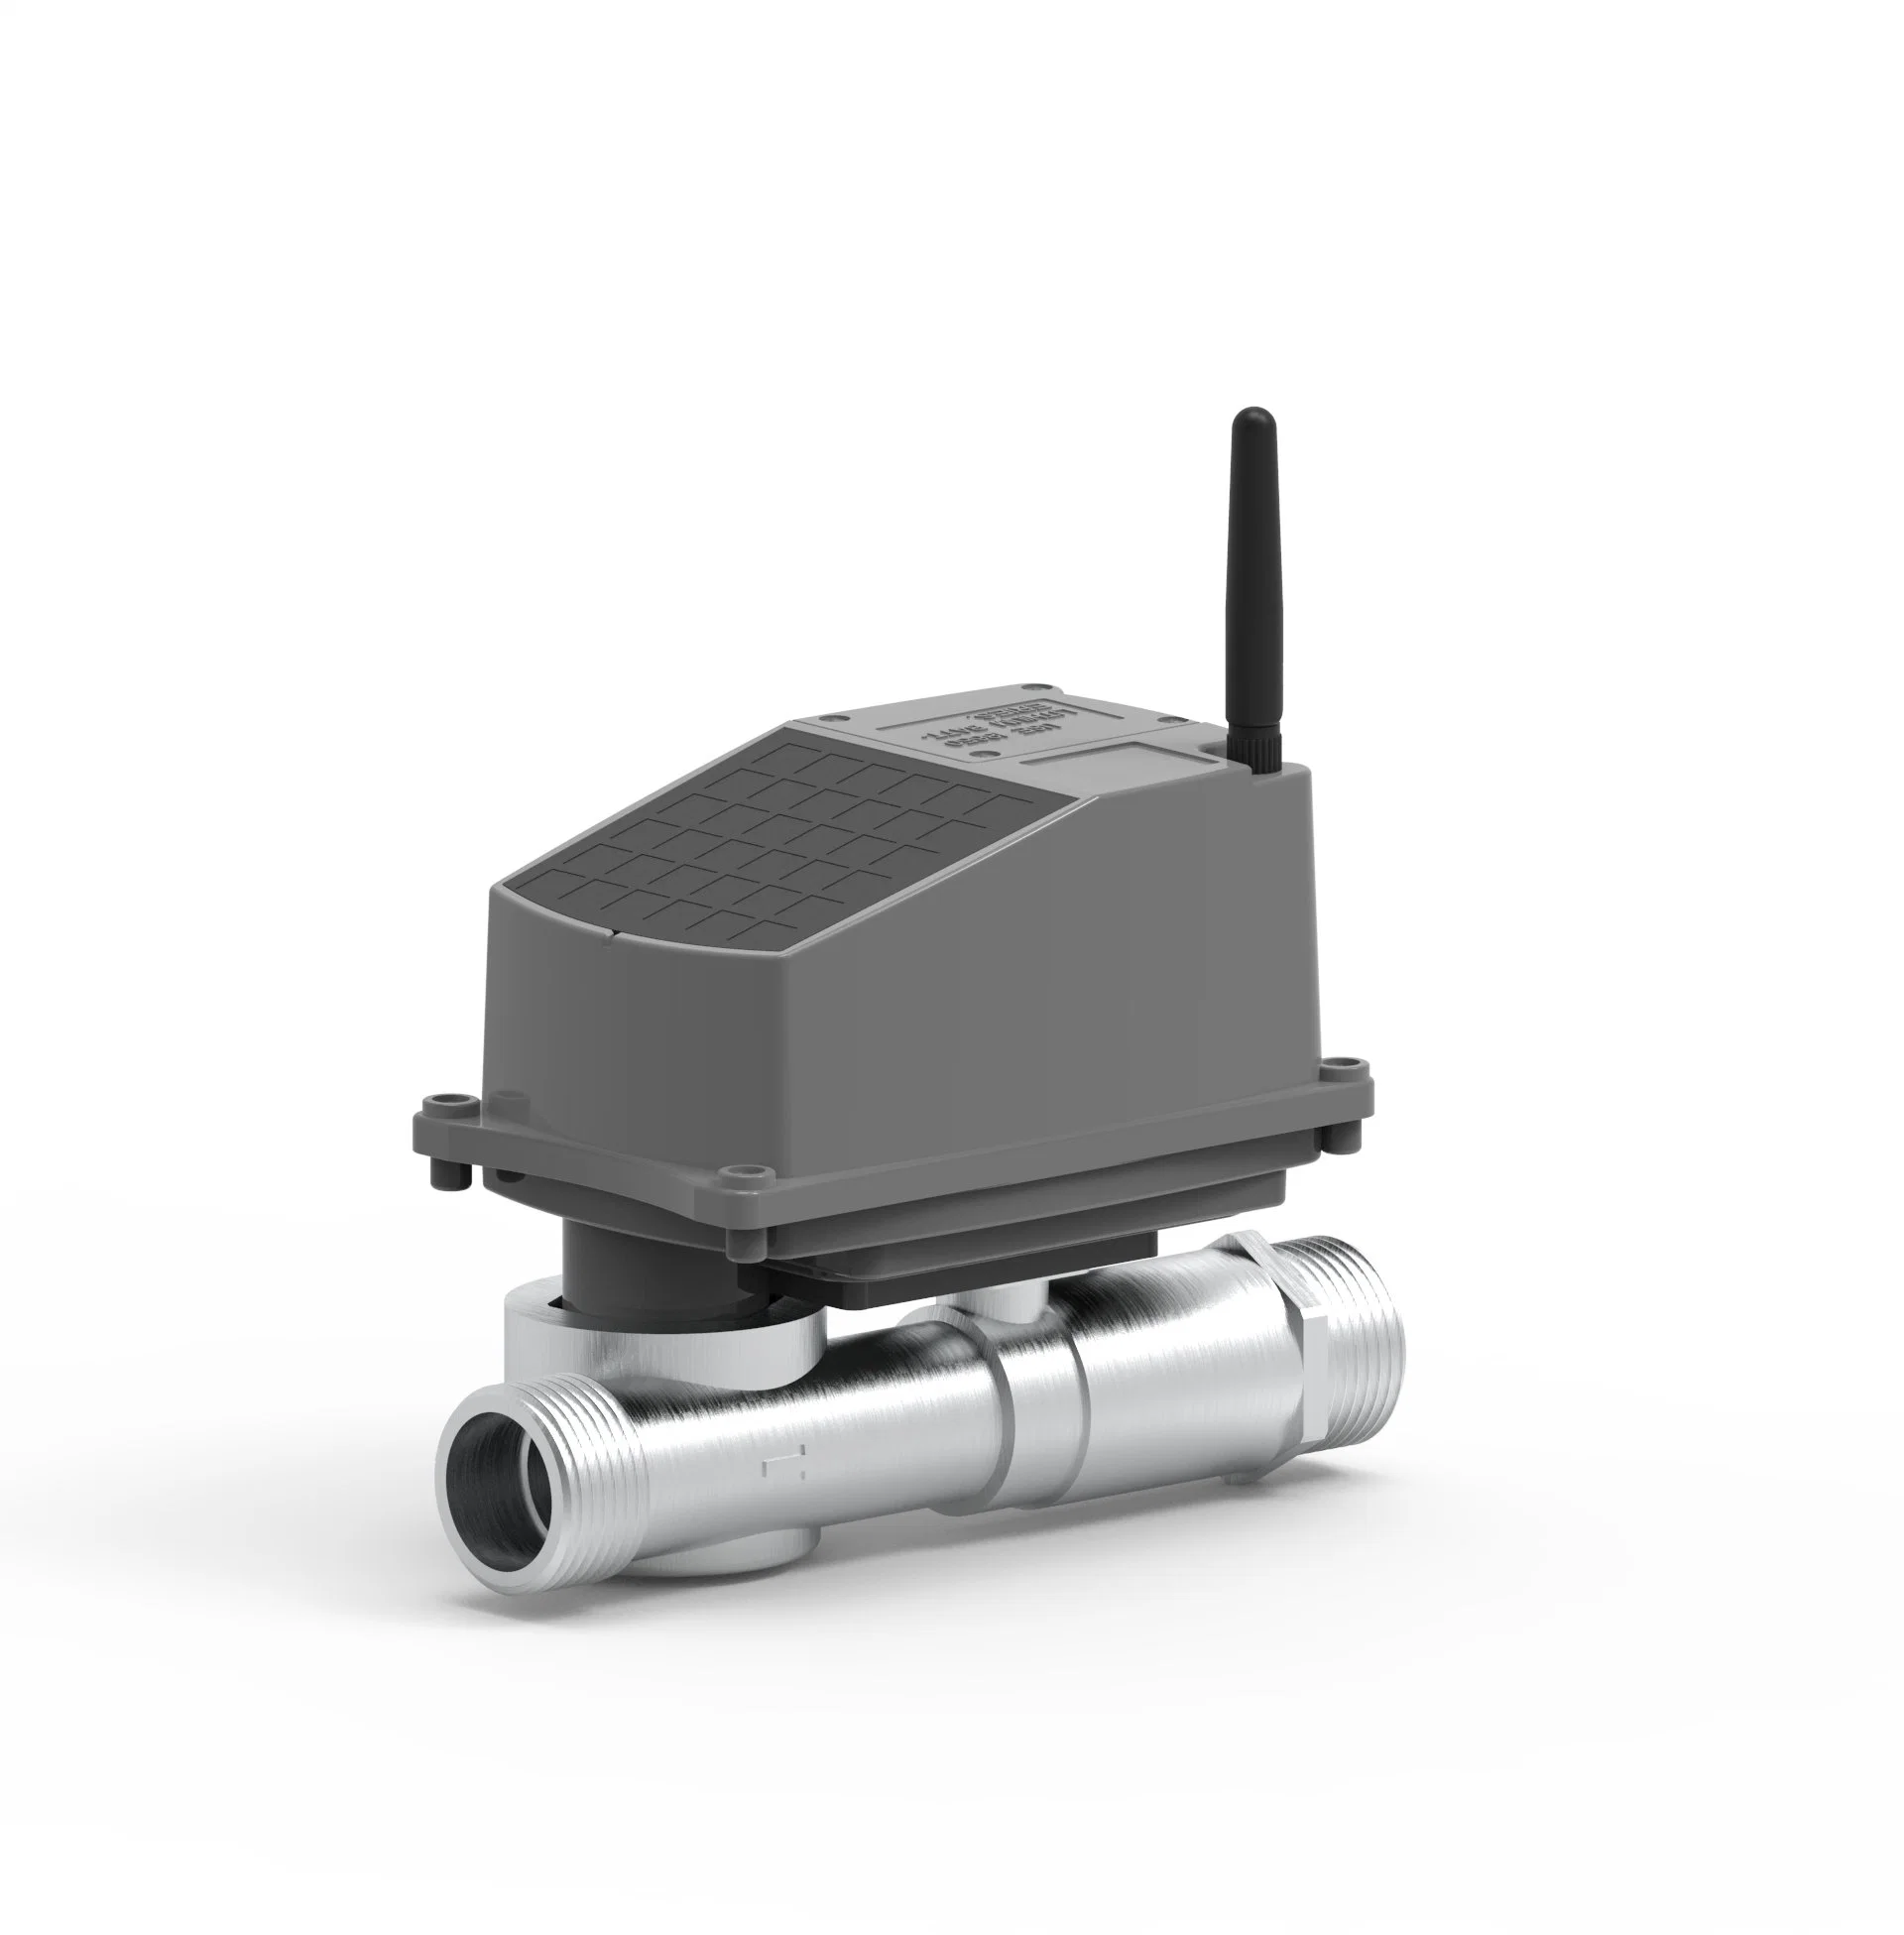 Rhf1s052 - Wireless Lorawan Water Meter with Valve Control